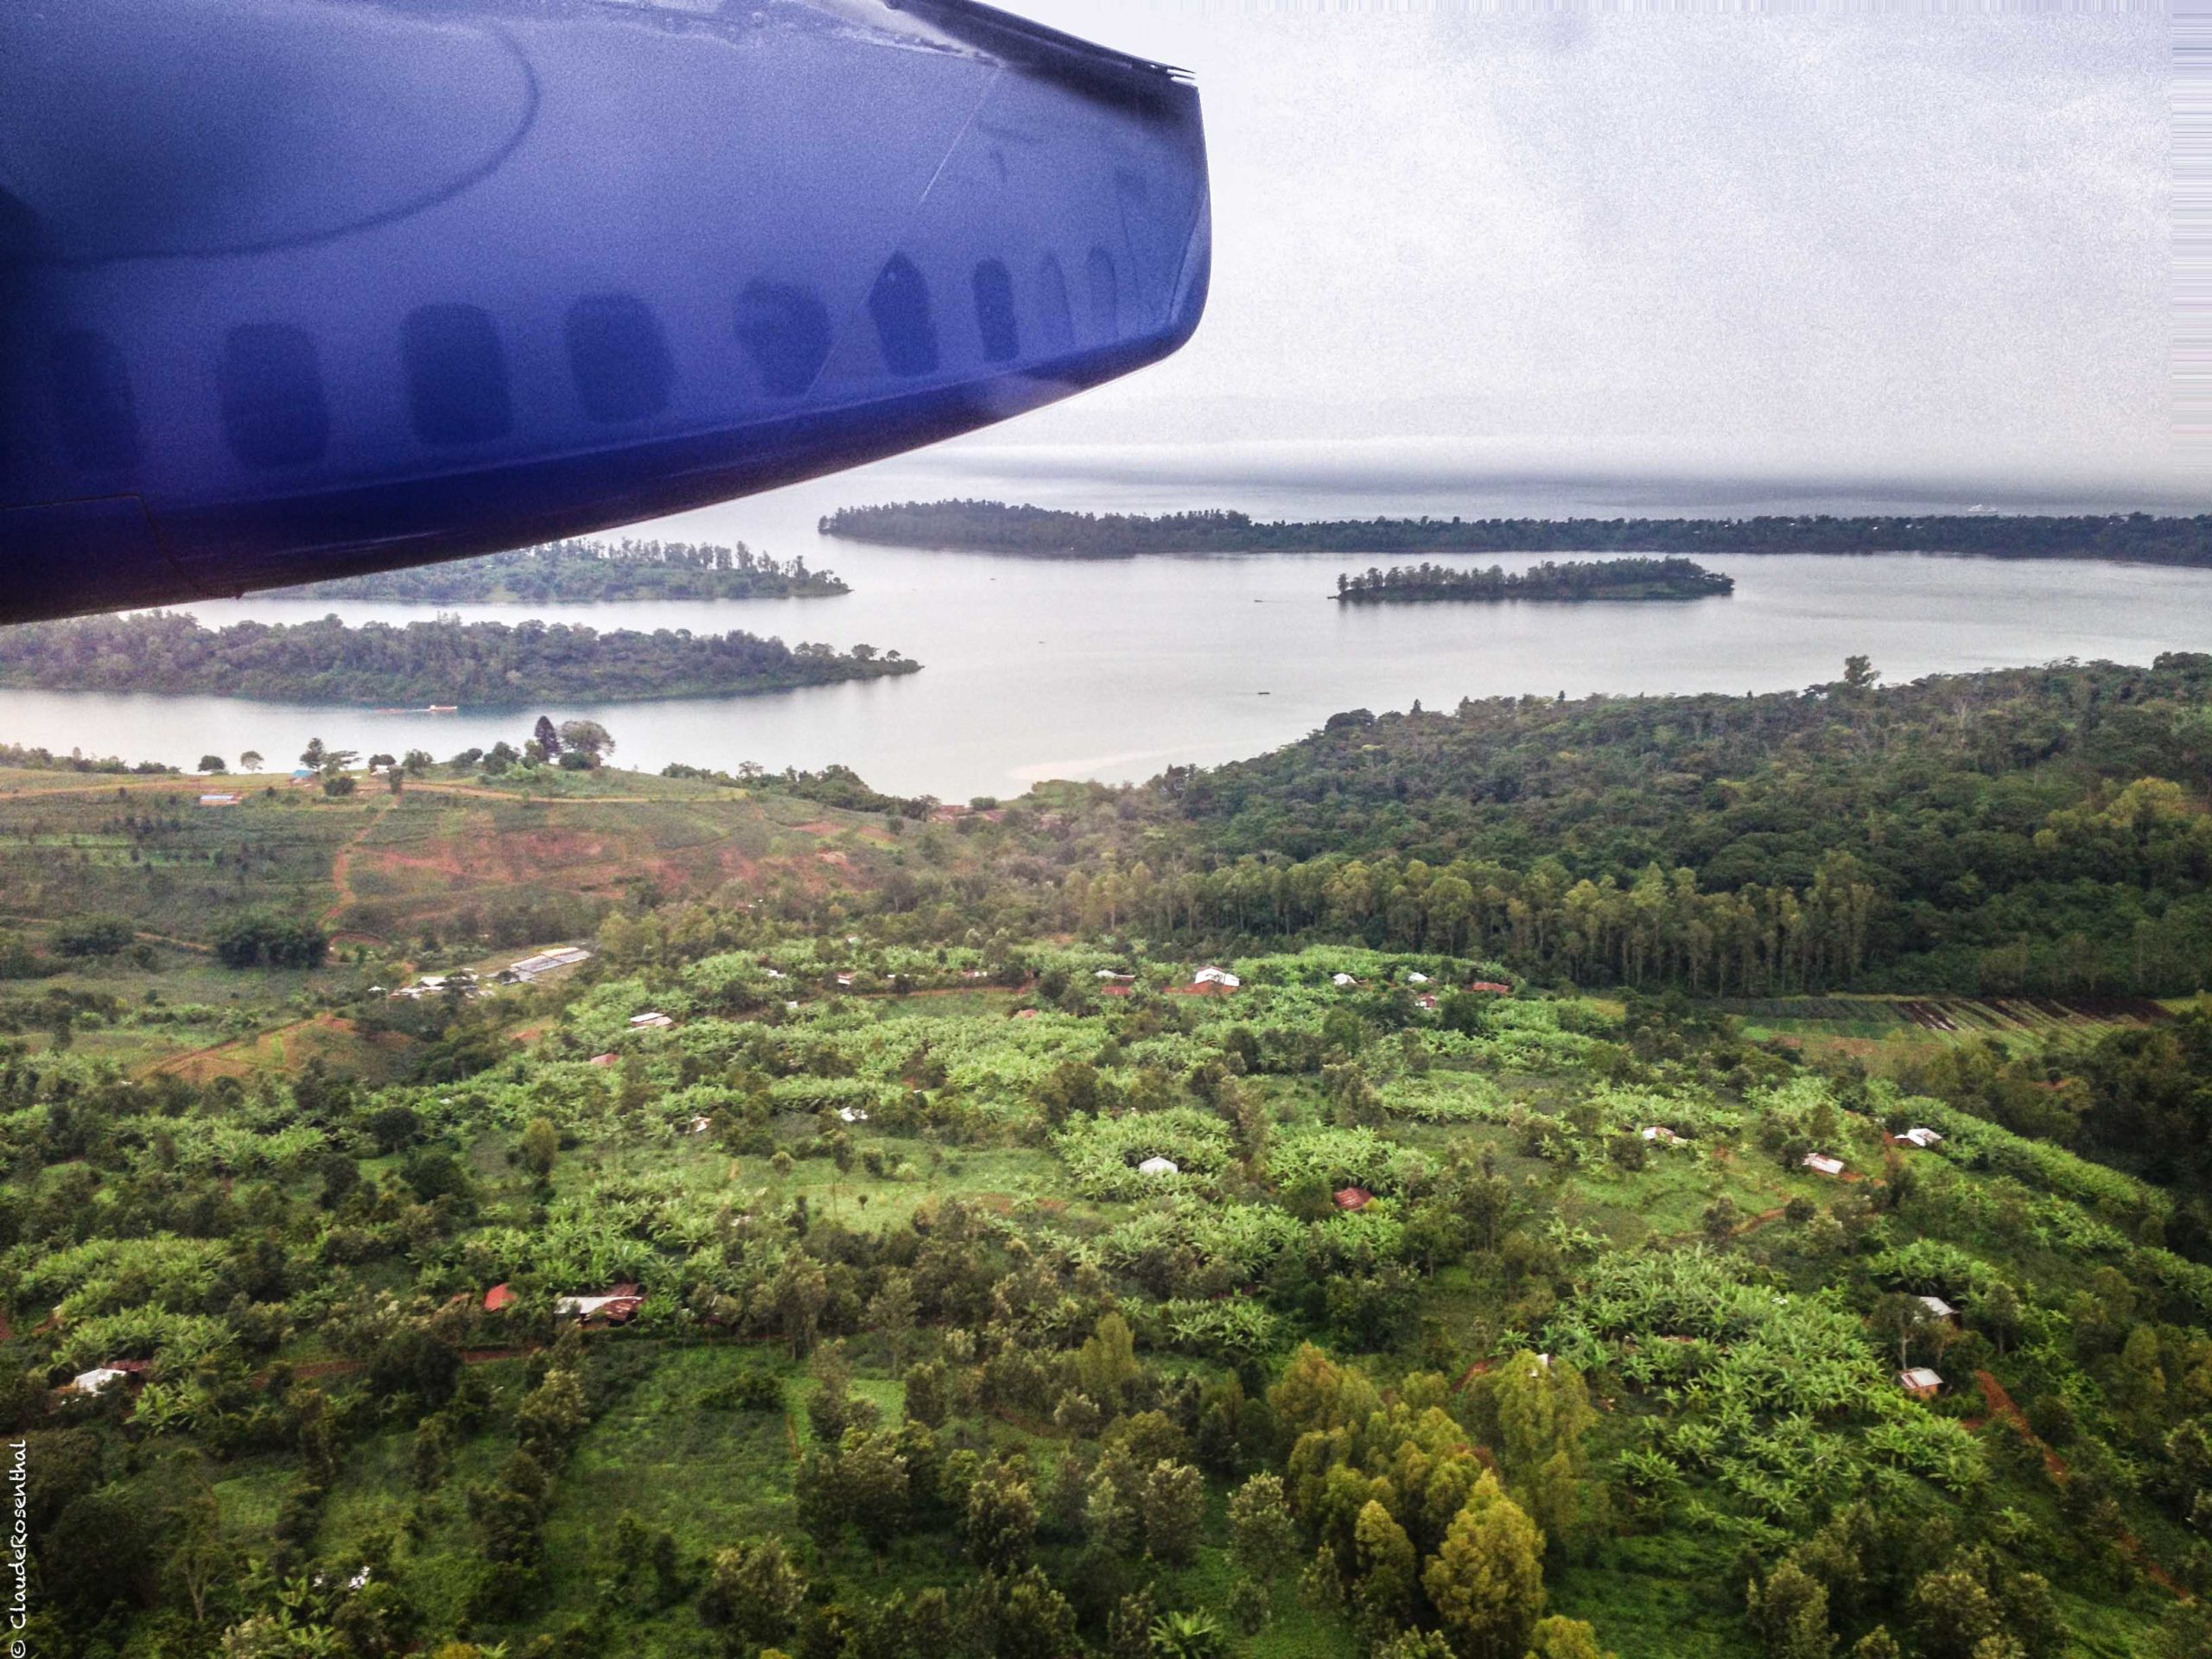 Arrivée sur Bukavu avion 2